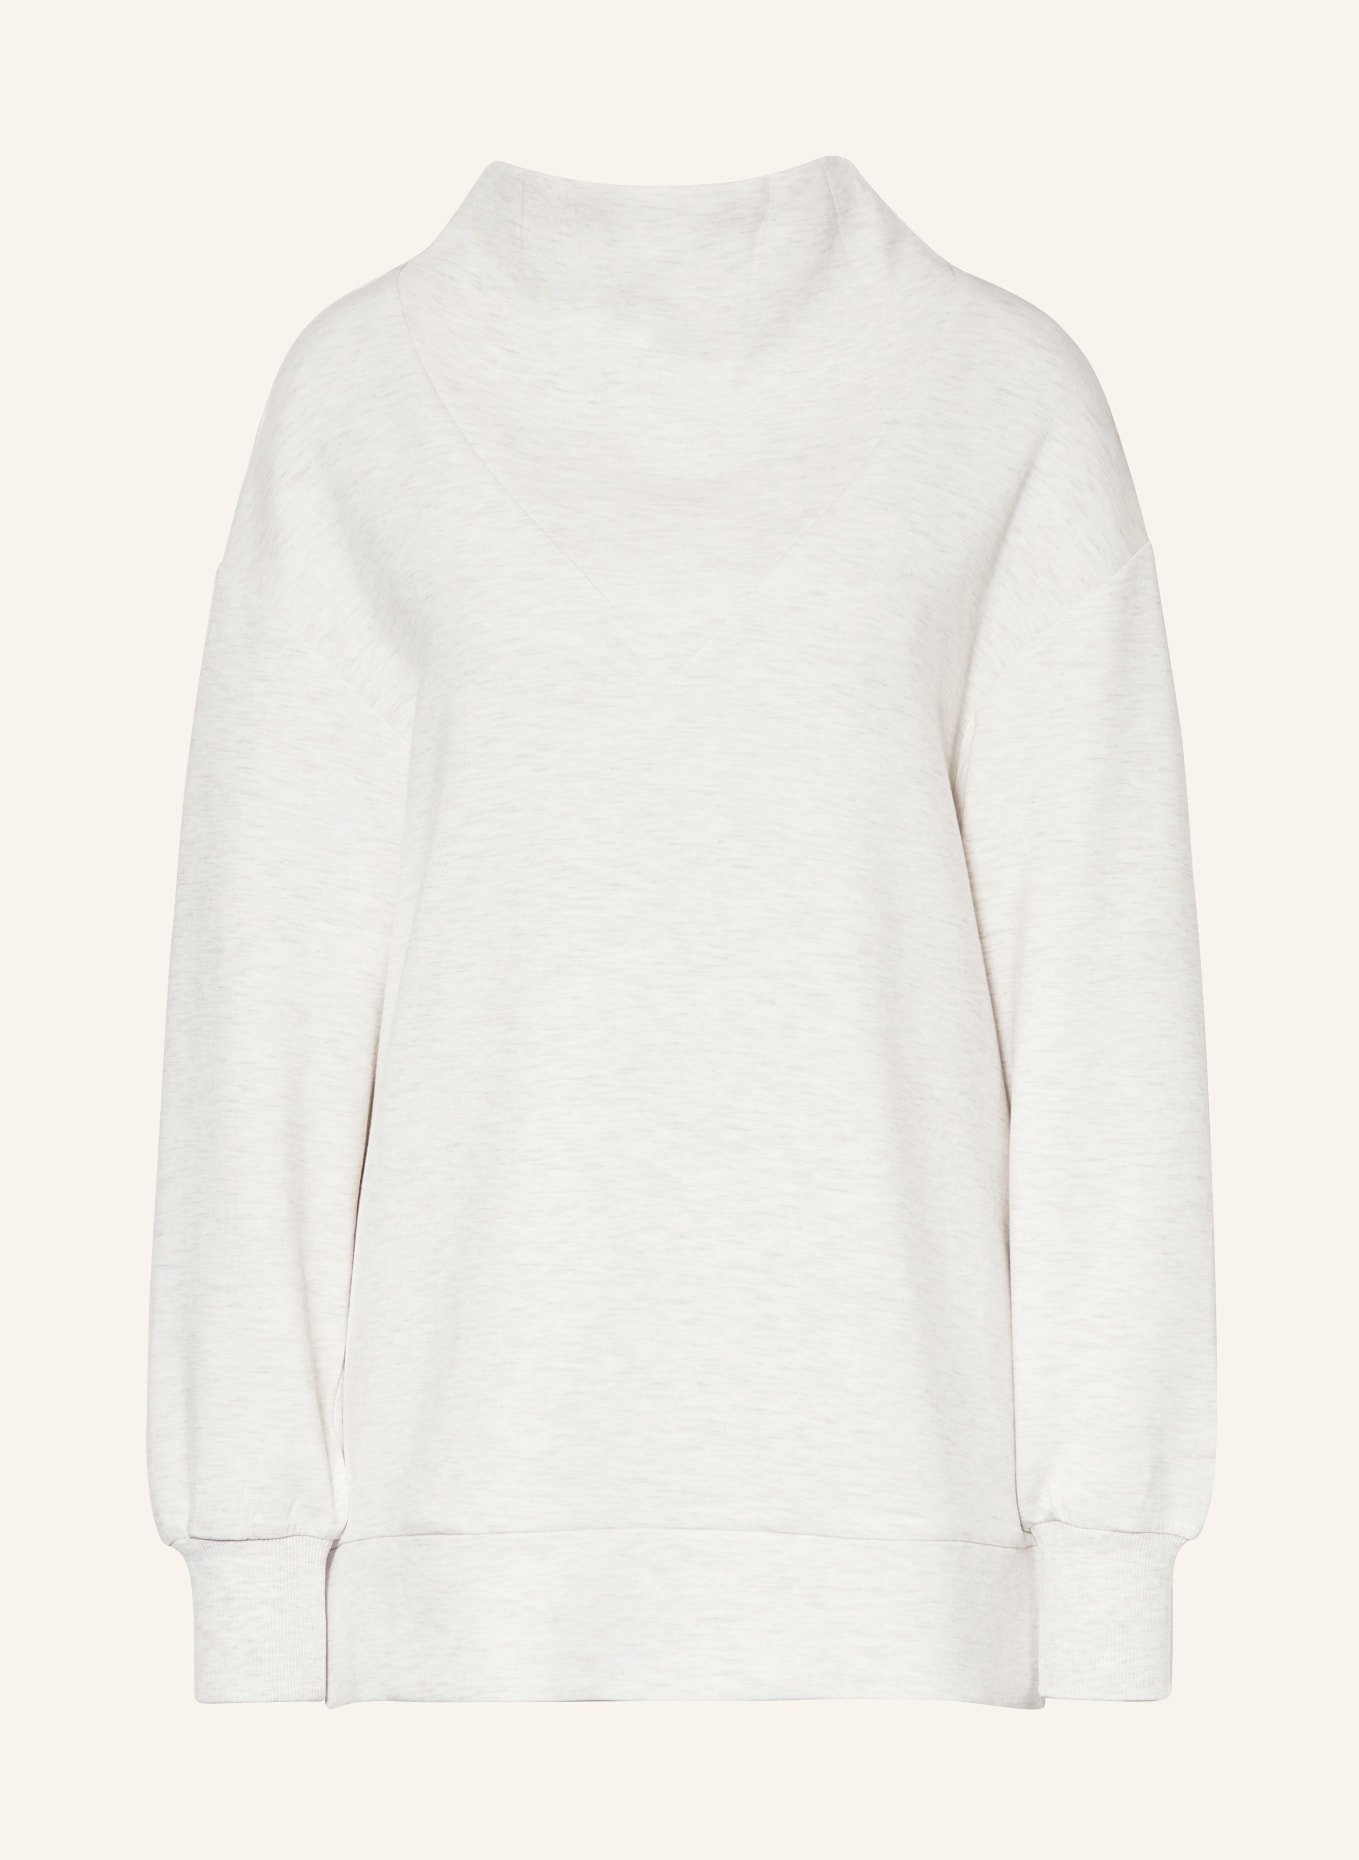 VARLEY Sweatshirt MODENA, Farbe: HELLGRAU (Bild 1)